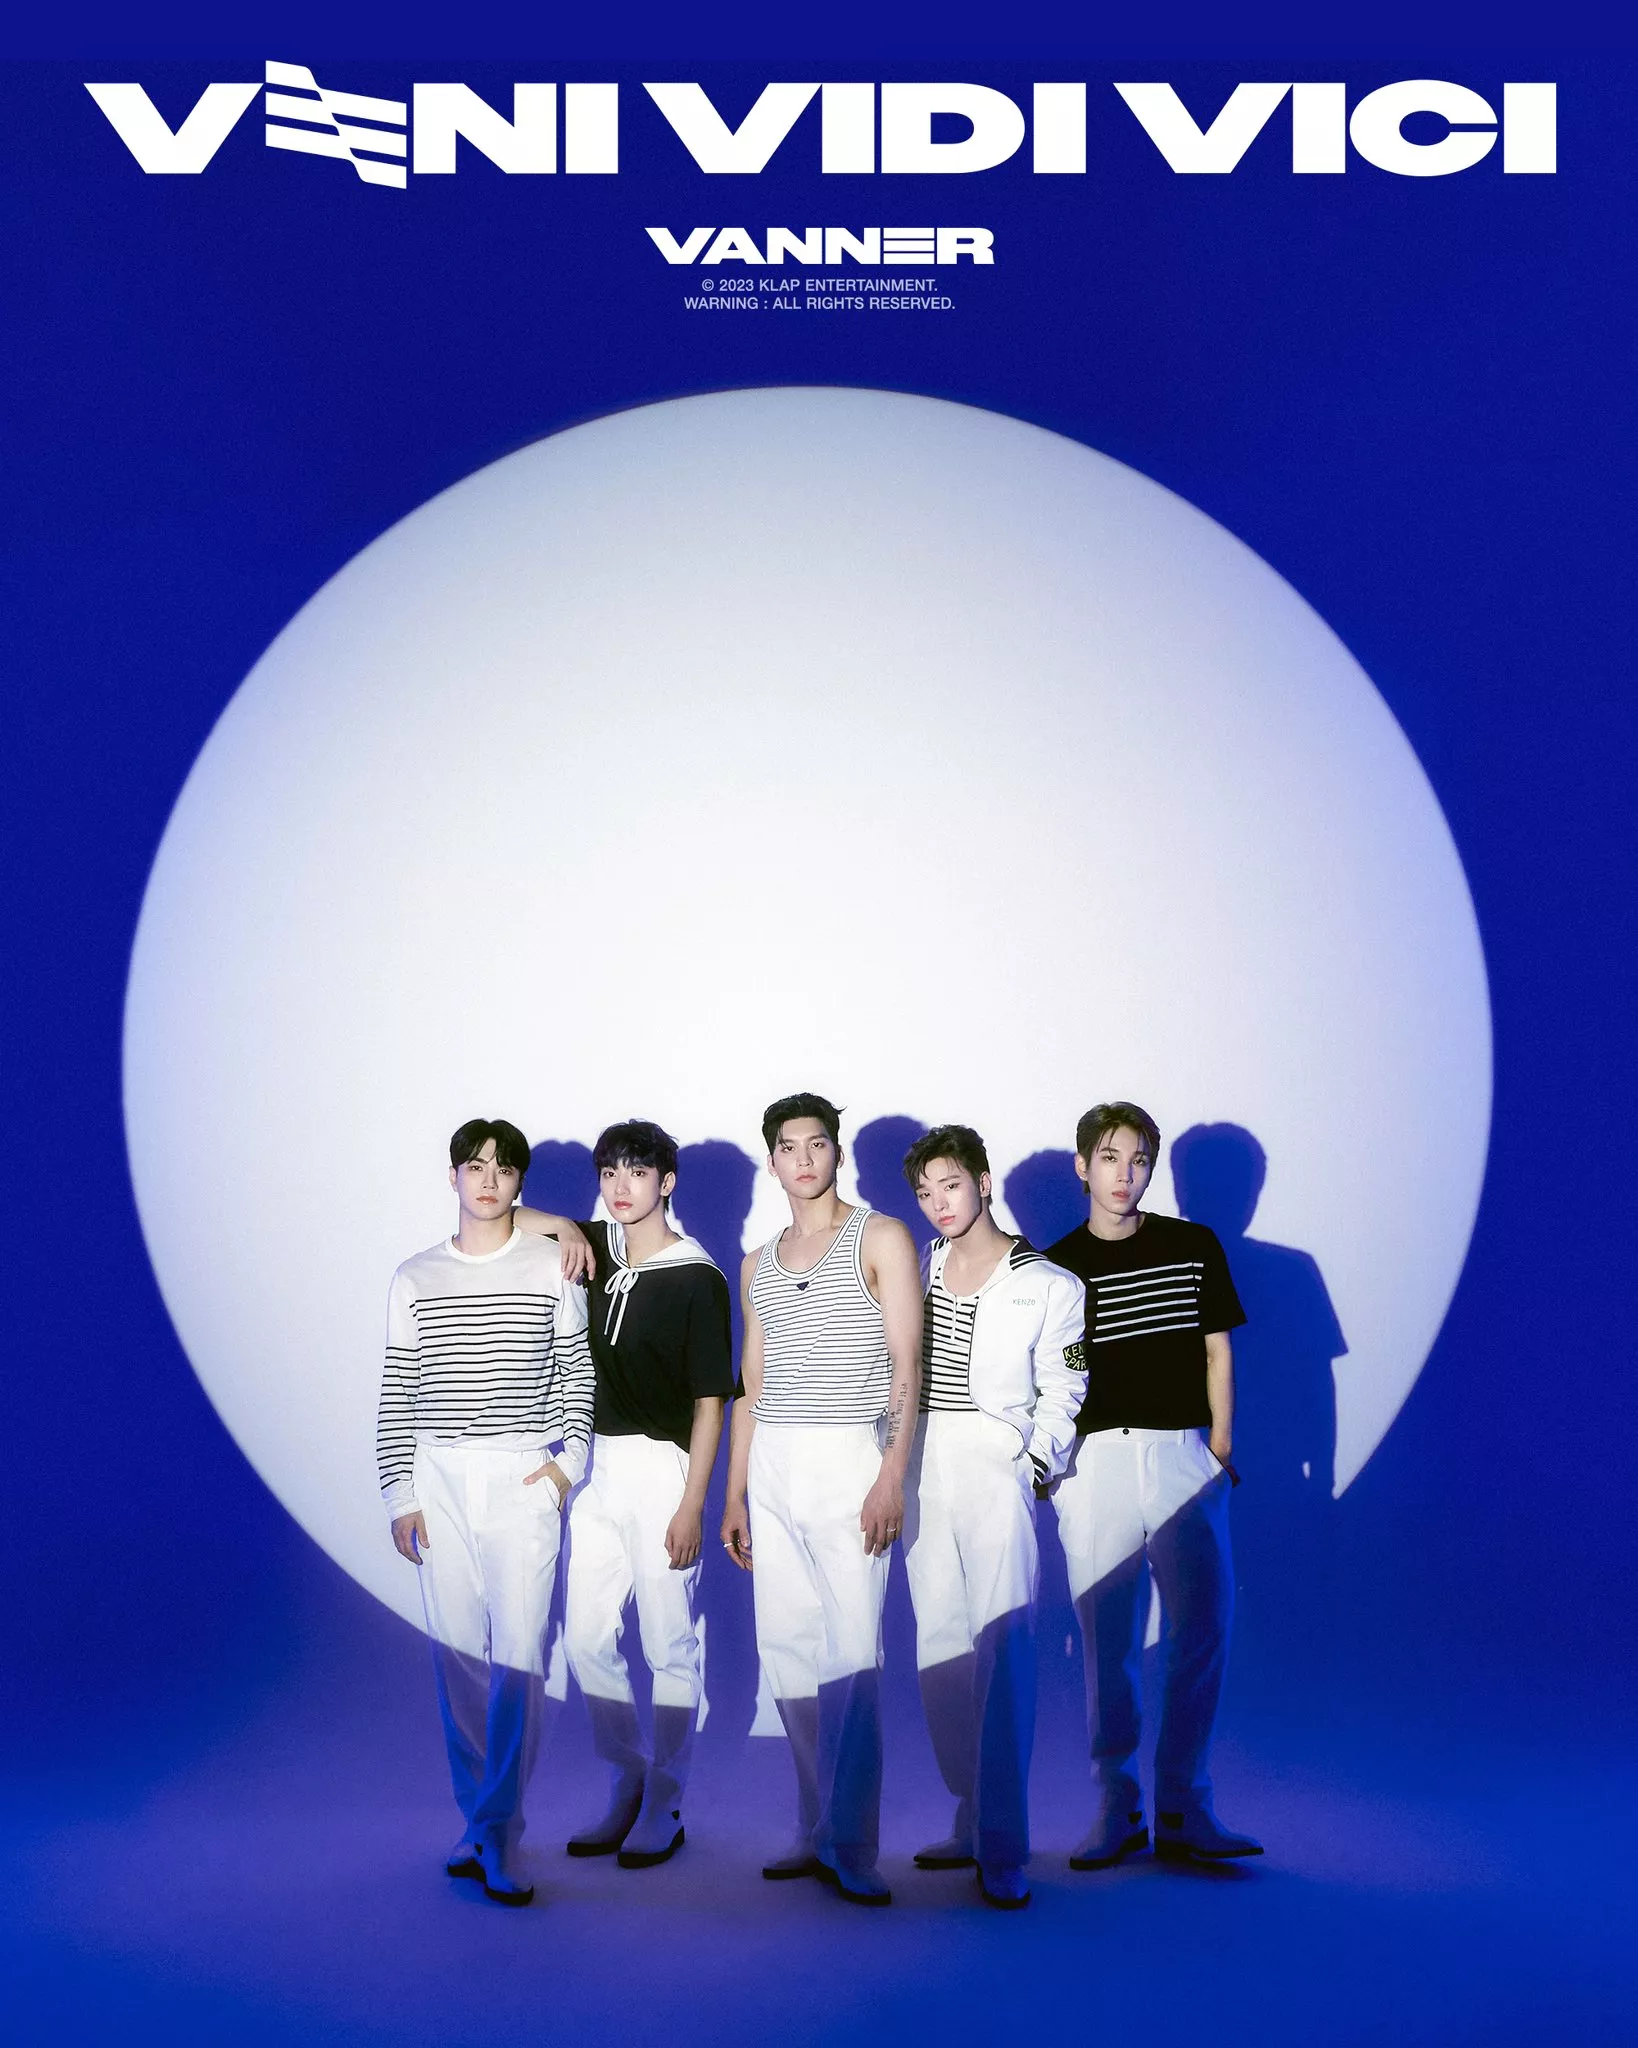 VANNER представили групповые концепт-фото для "VENI VIDI VICI"